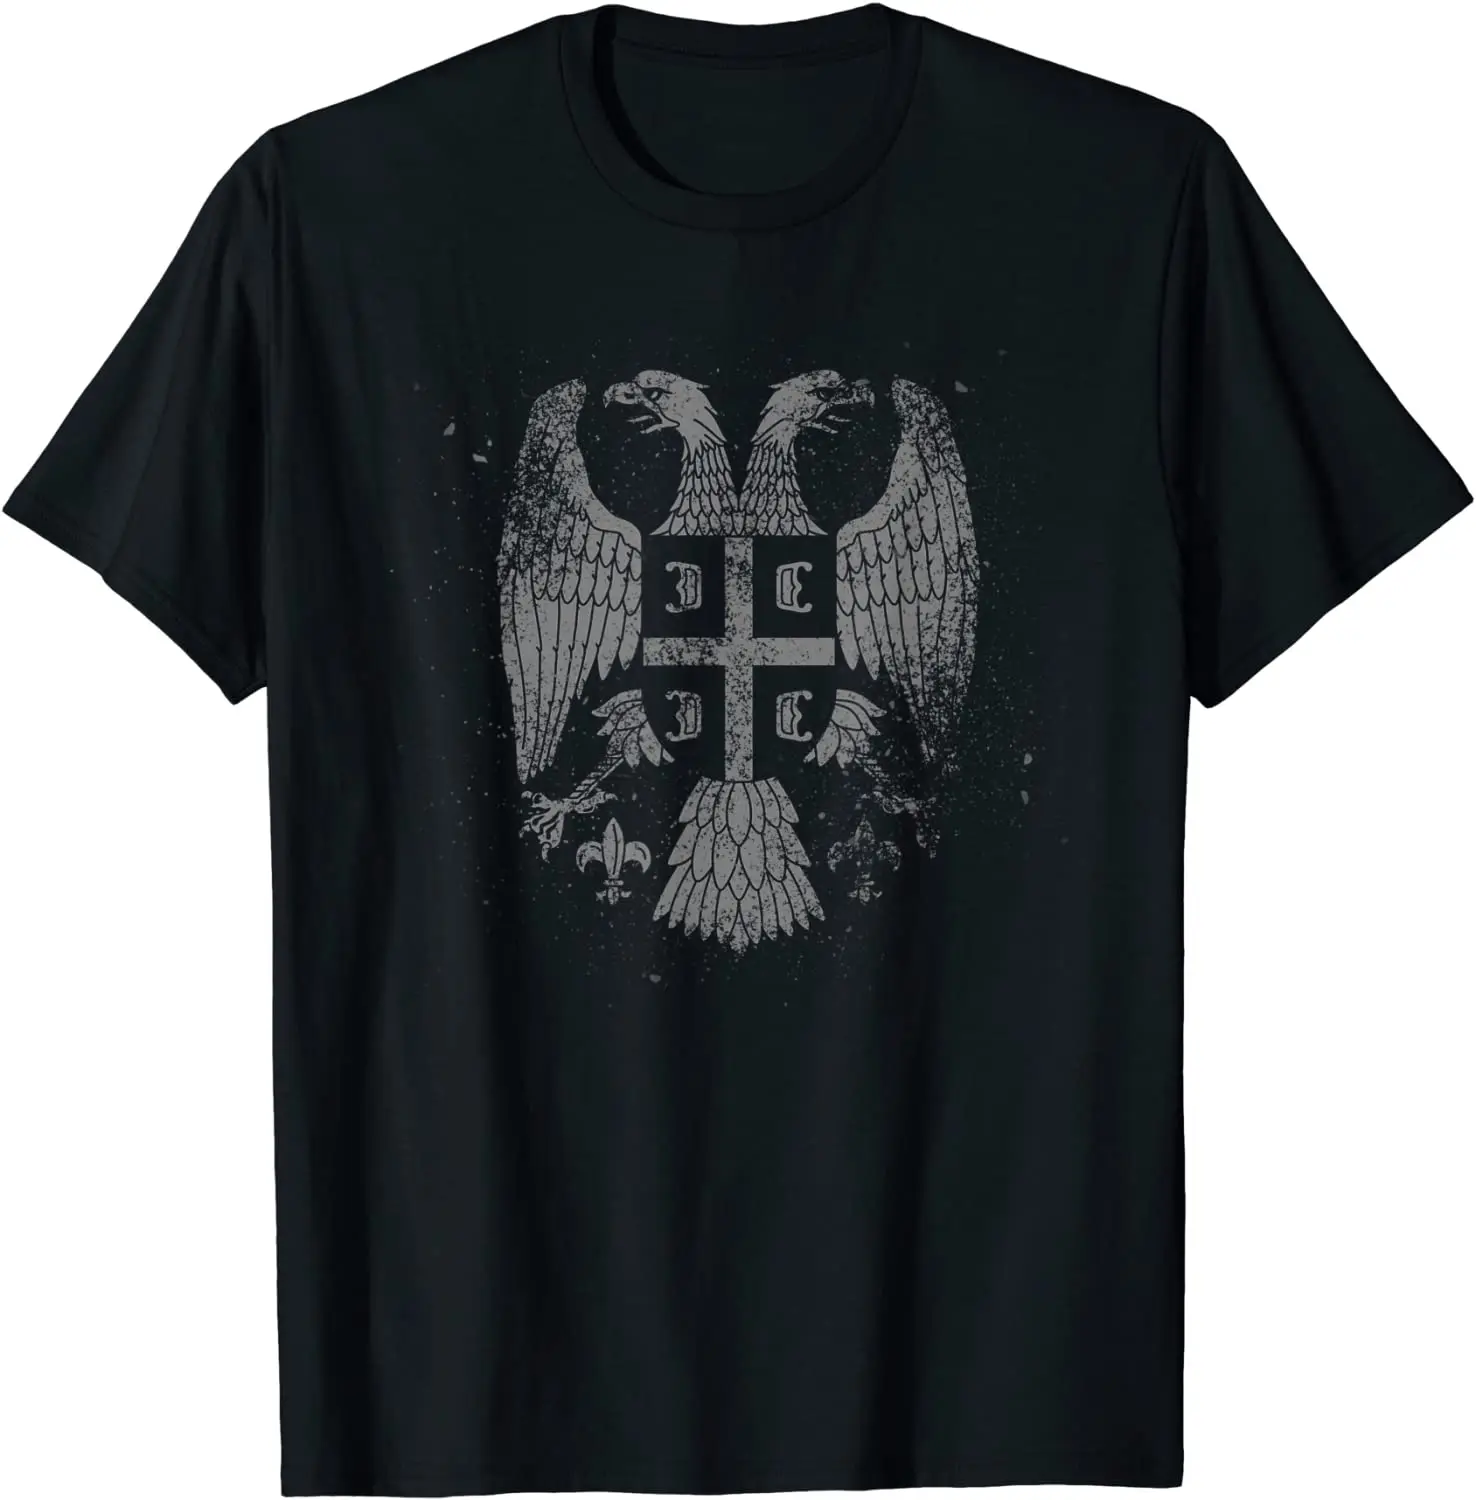 

Serbian Double Headed Eagle Men TShirt for a Serbia Fan T-Shirt Short Sleeve Casual 100% Cotton Shirts